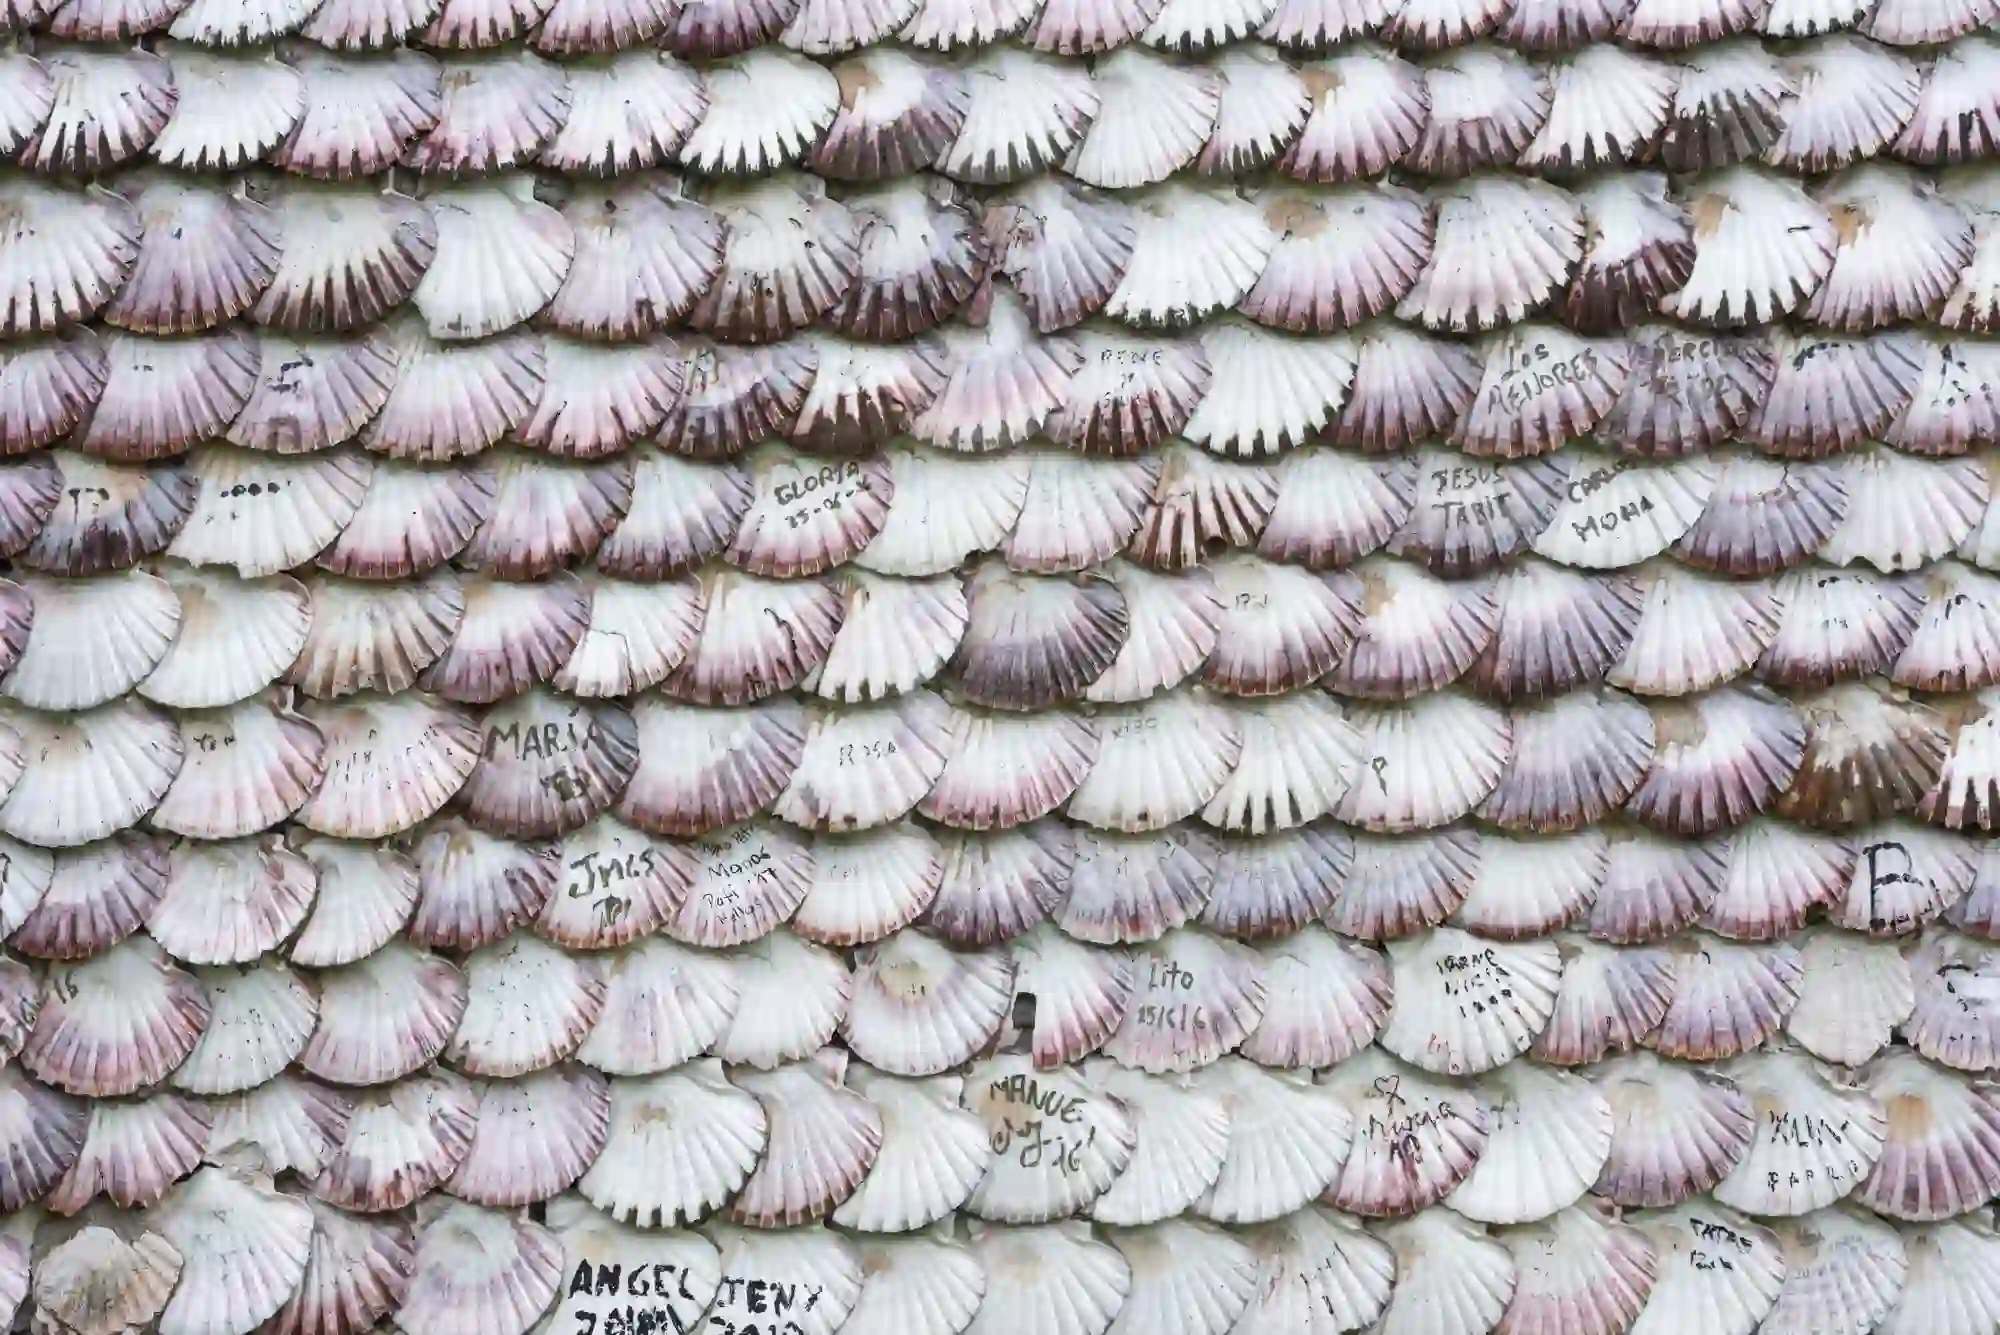 Baja California, the main producer of bivalve mollusks in Mexico